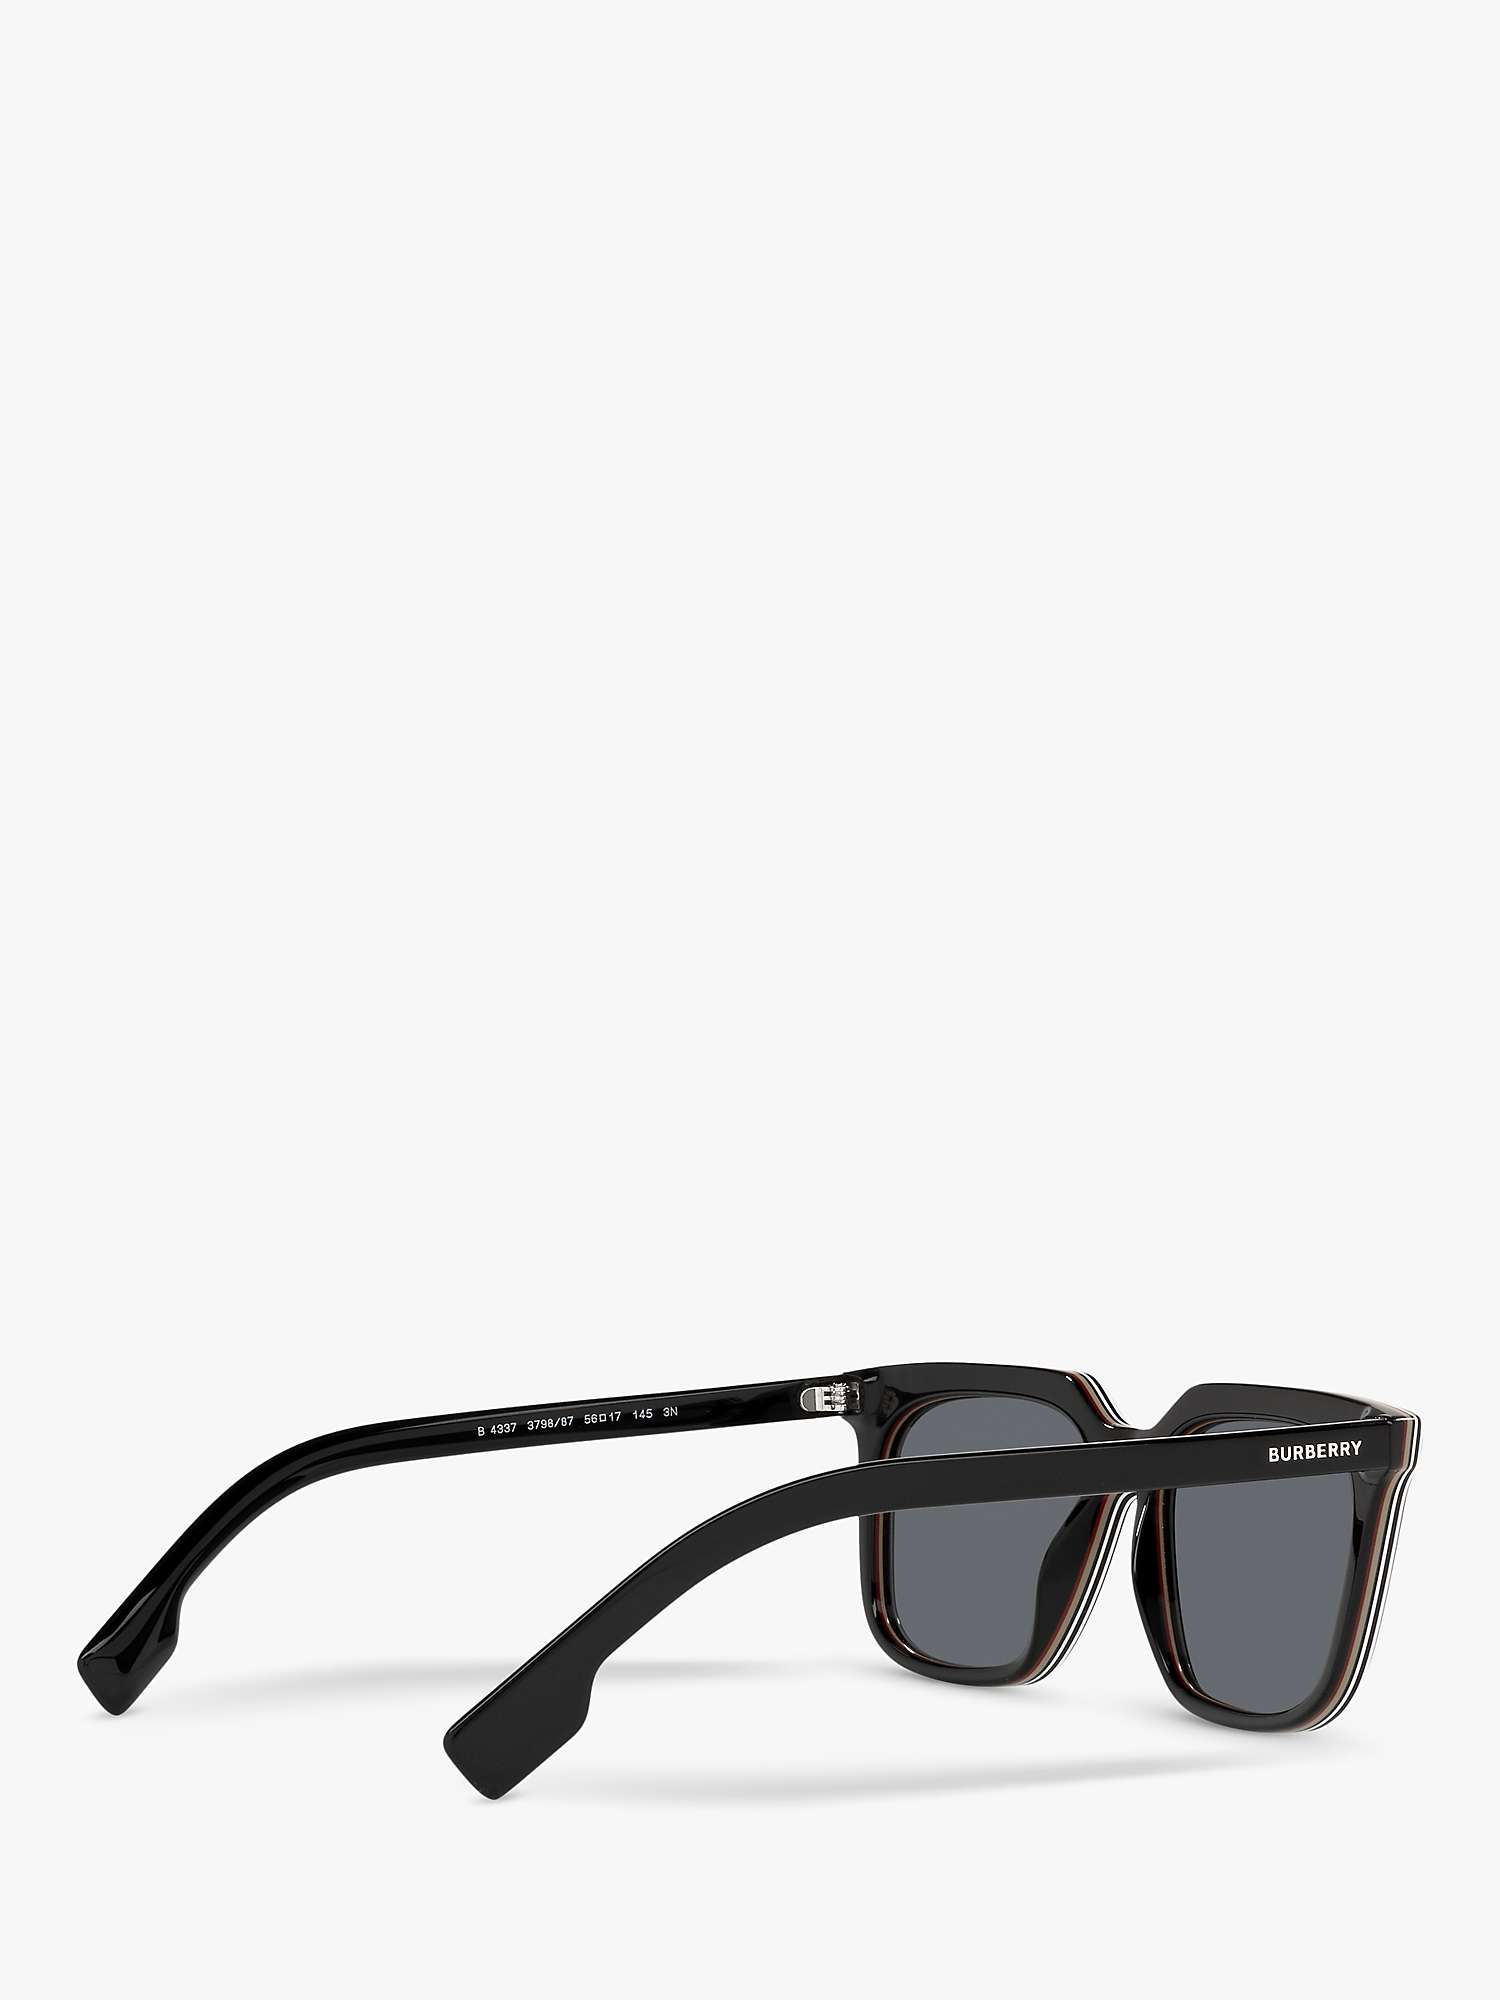 Buy Burberry BE4337 Men's Square Sunglasses Online at johnlewis.com